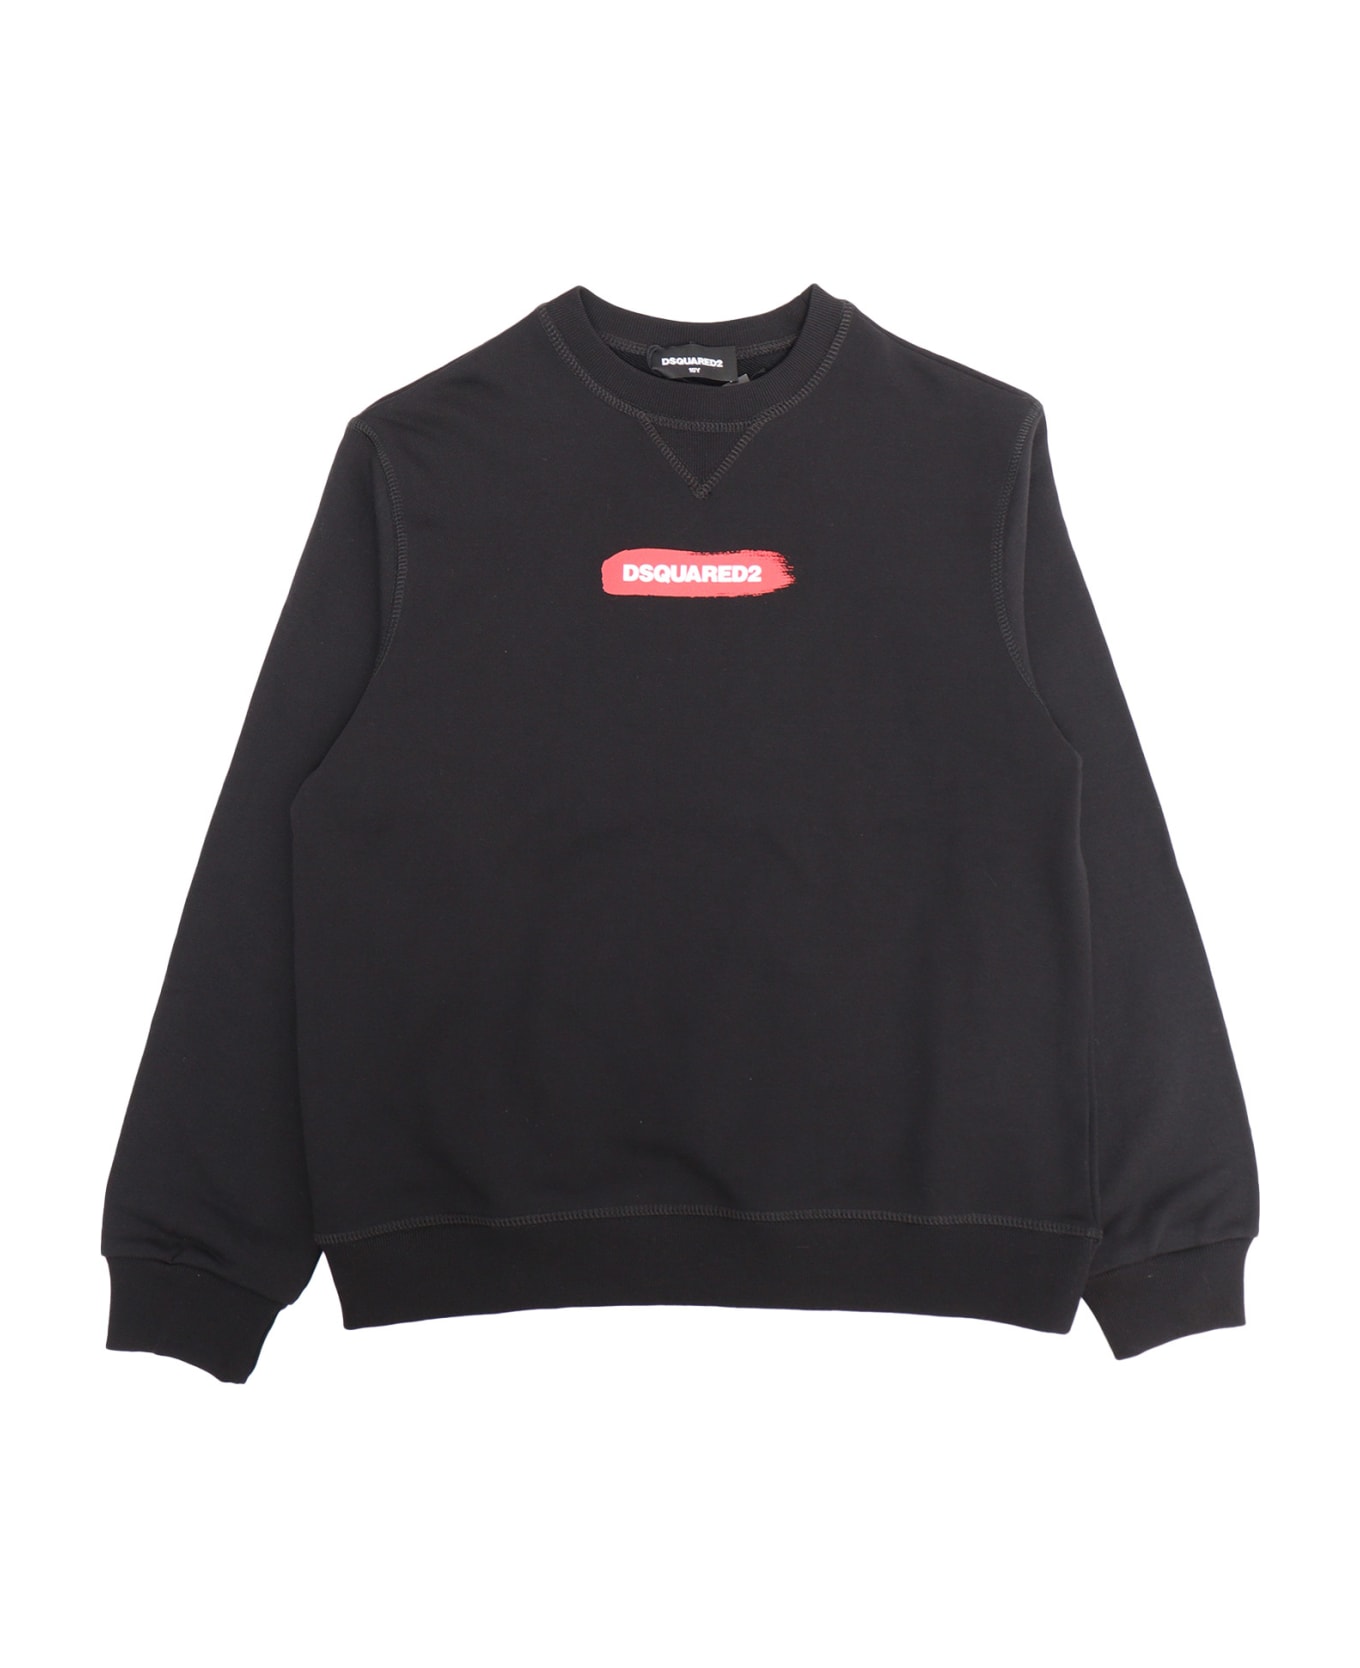 Dsquared2 D-squared2 Child Sweatshirt - BLACK